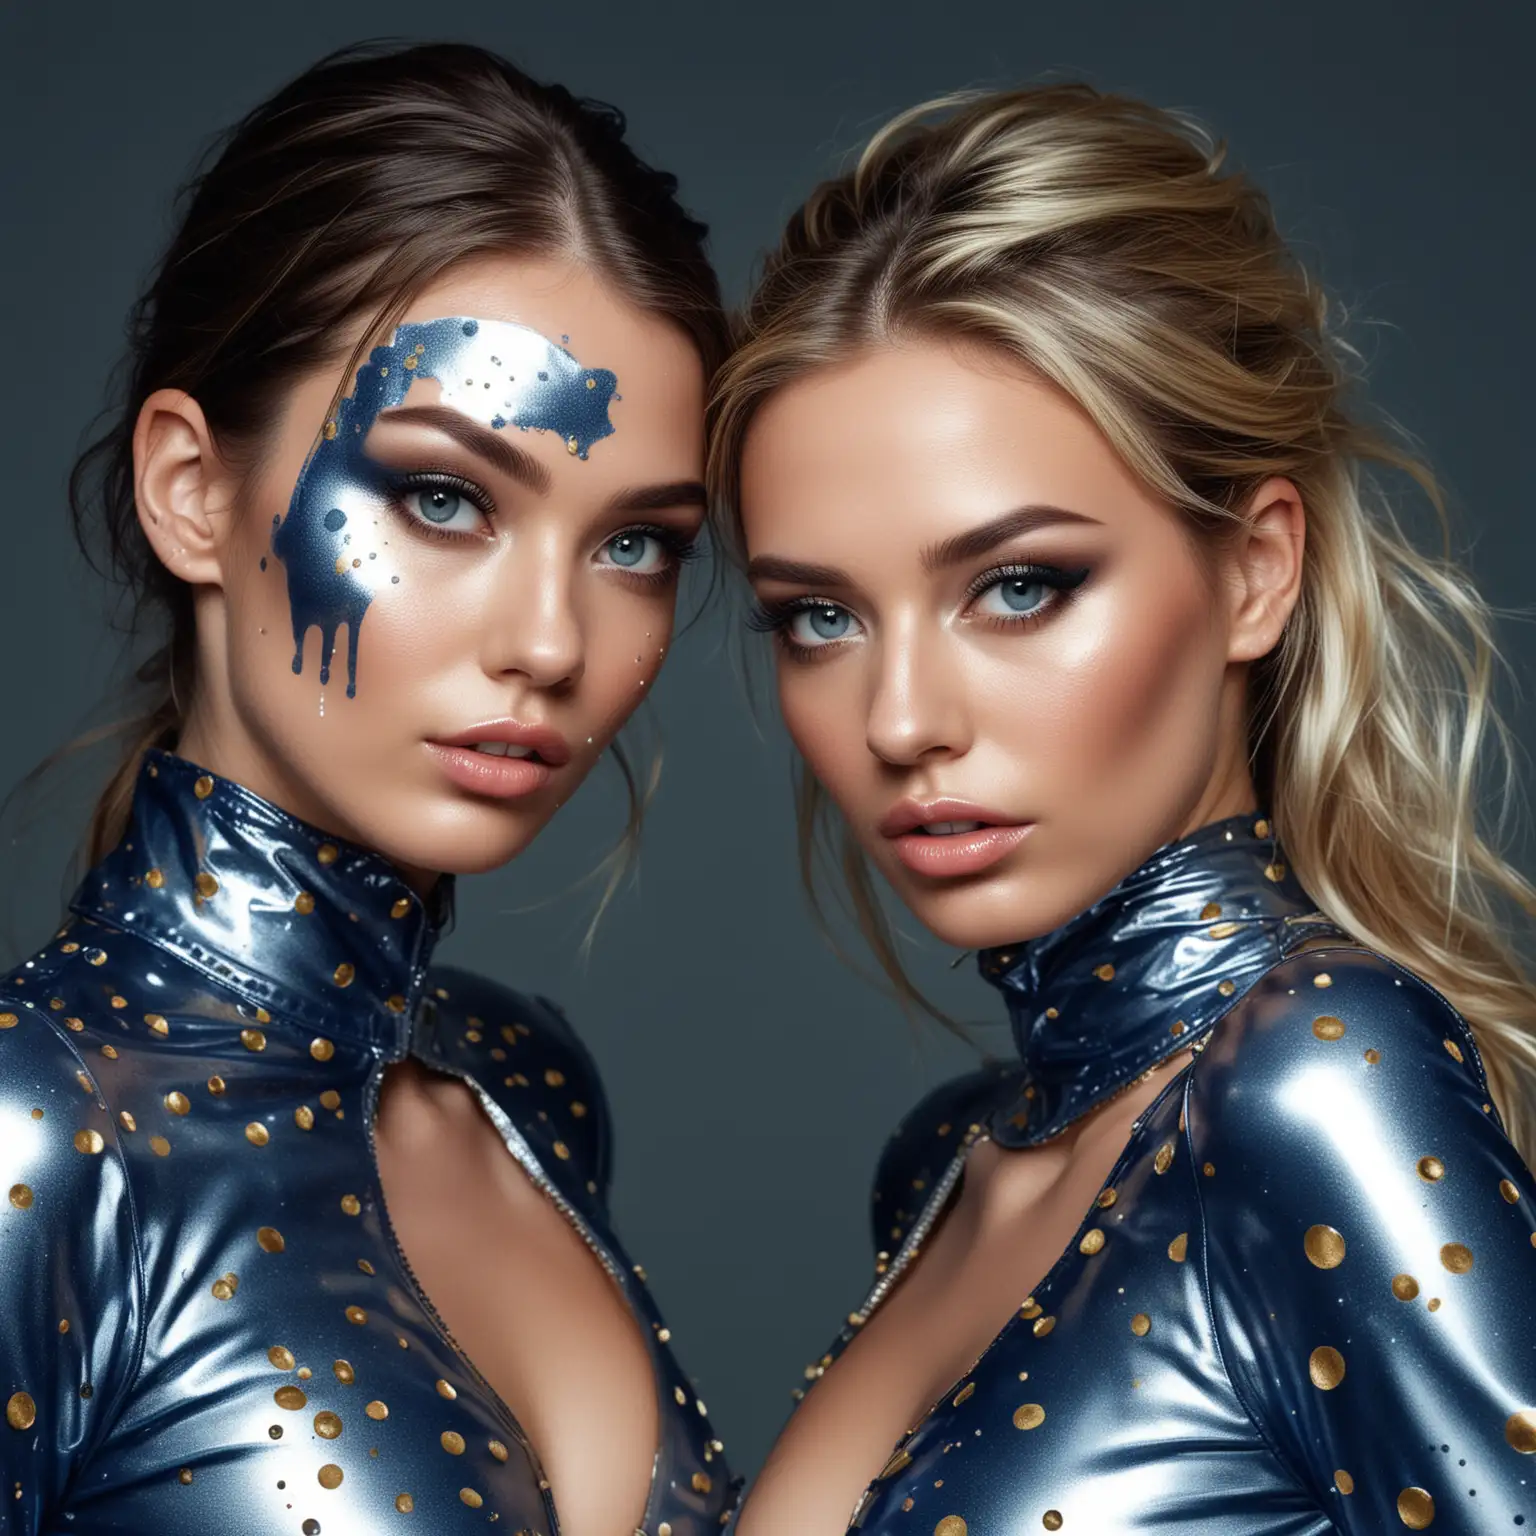 Two Glamorous Women in Elegant Latex Attire with Victorias Secret Makeup